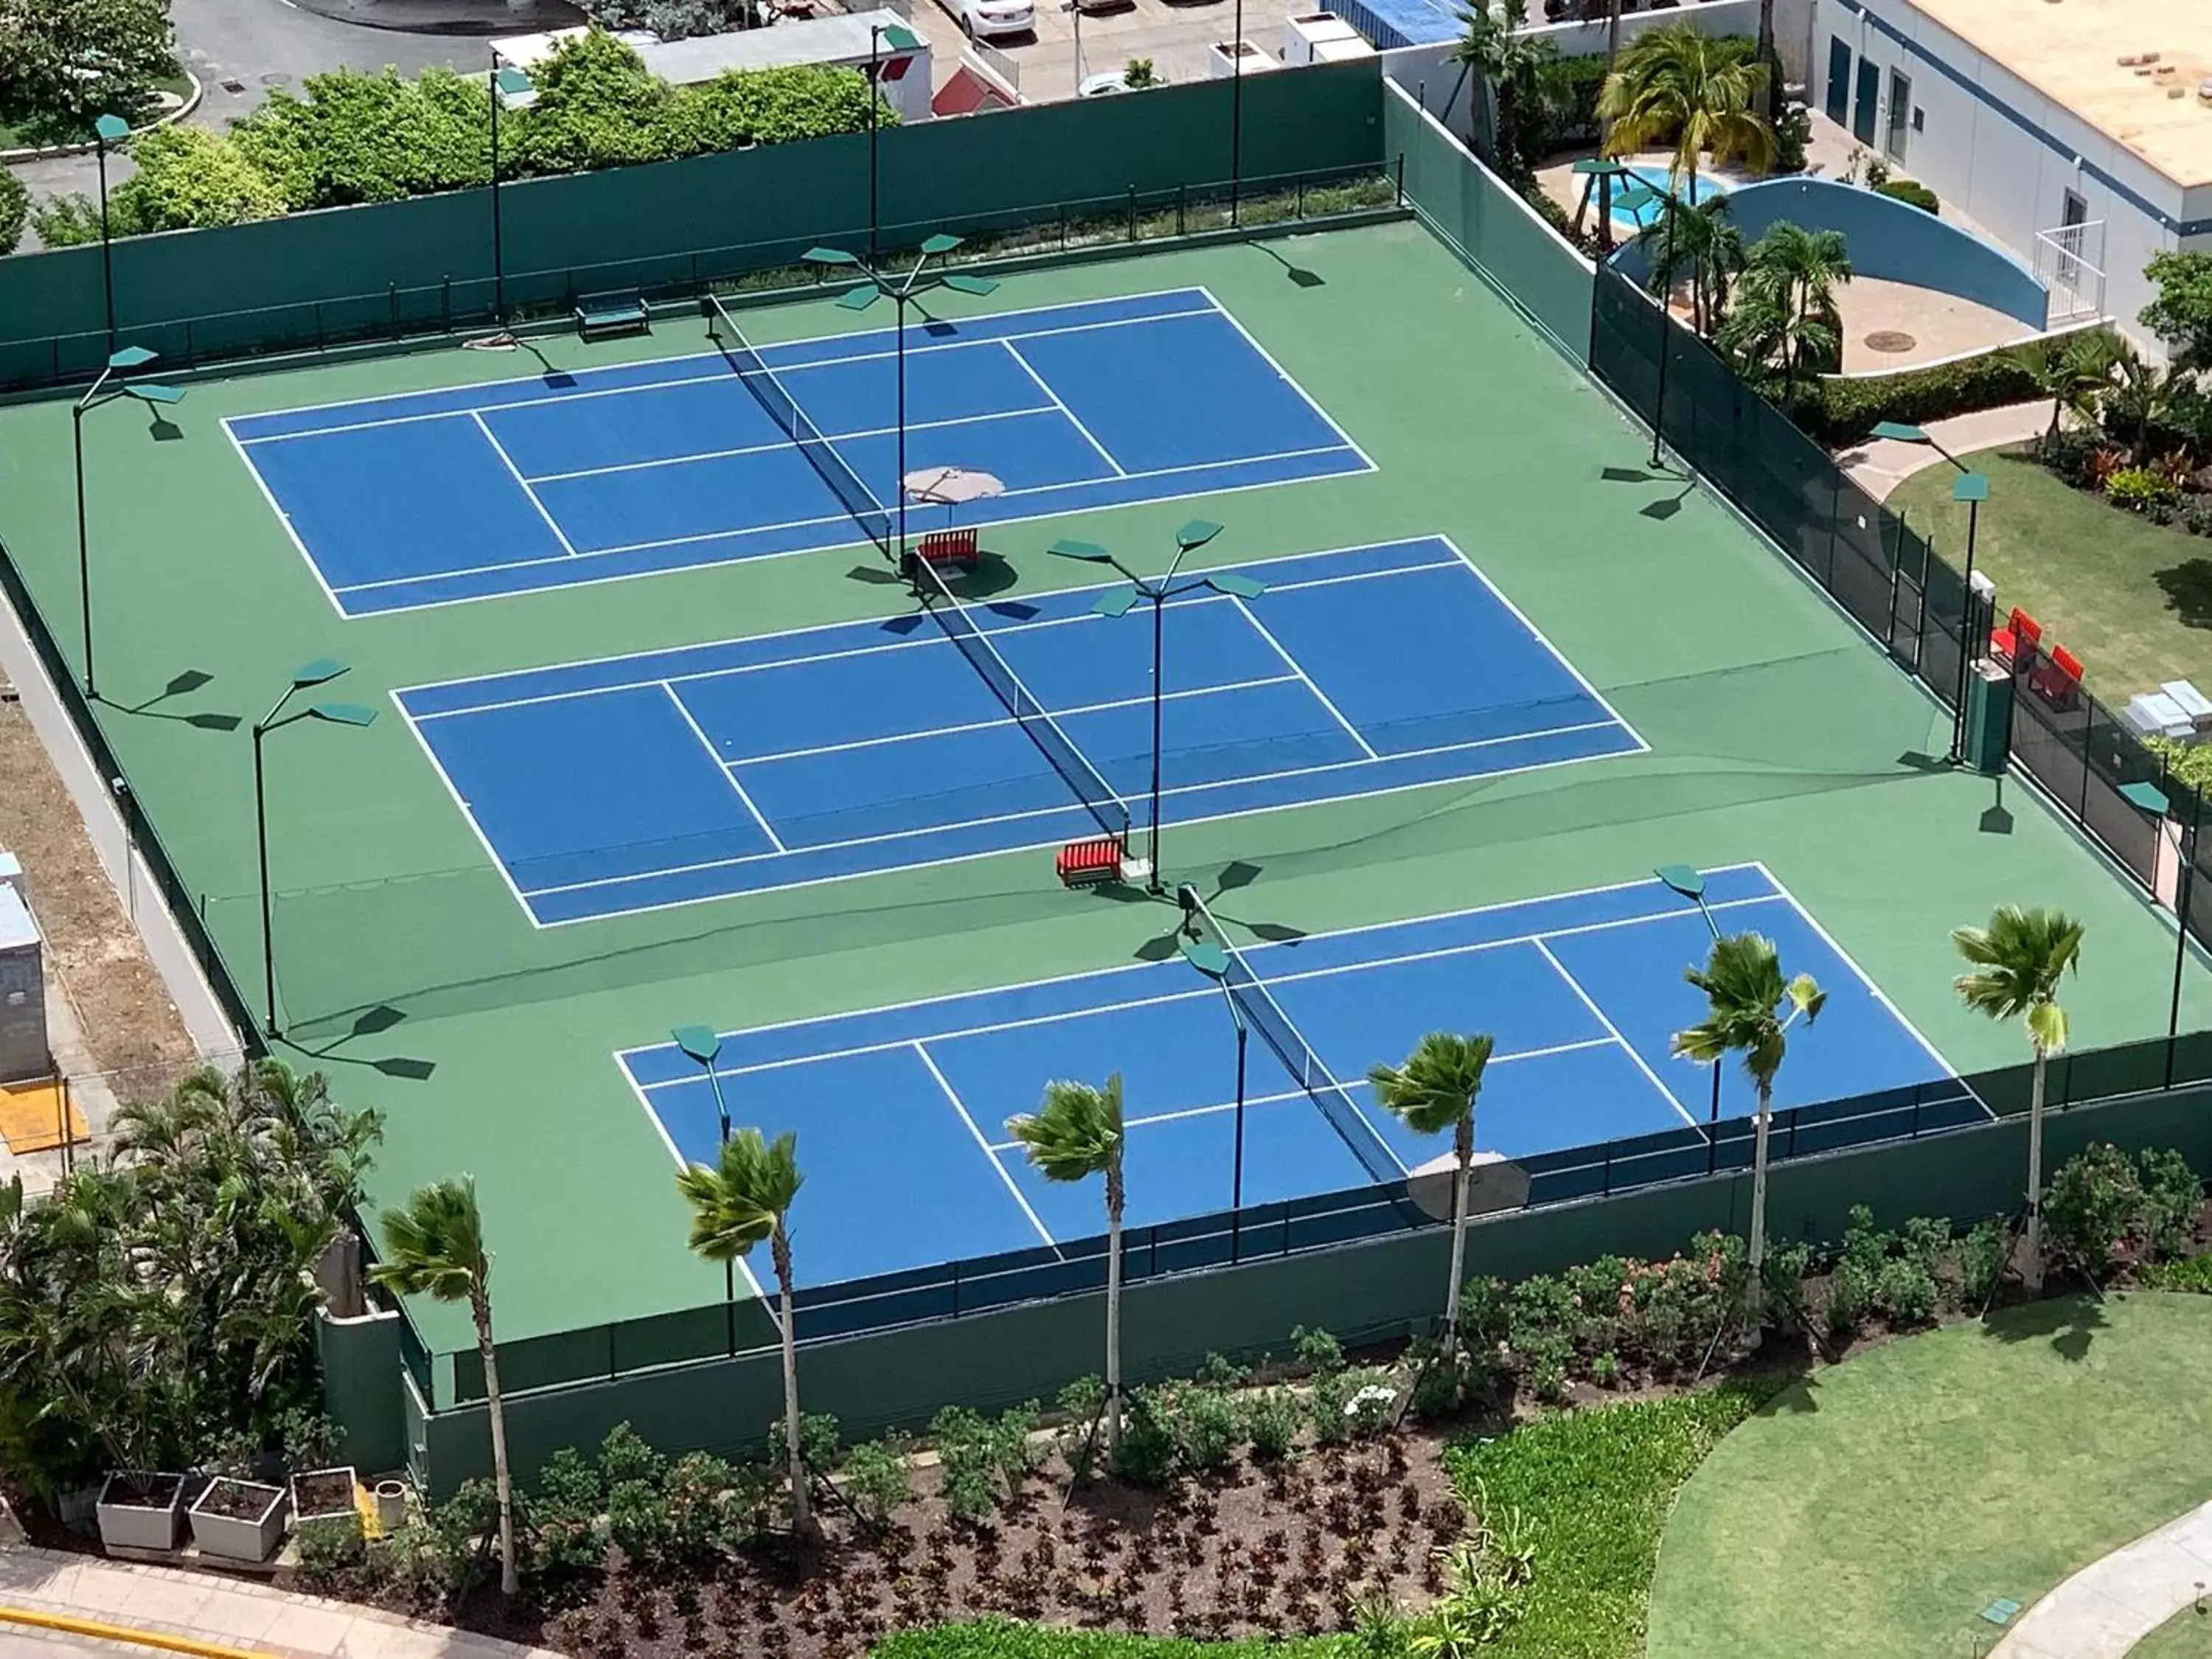 Sports, Tennis/Squash in Caribe Hilton